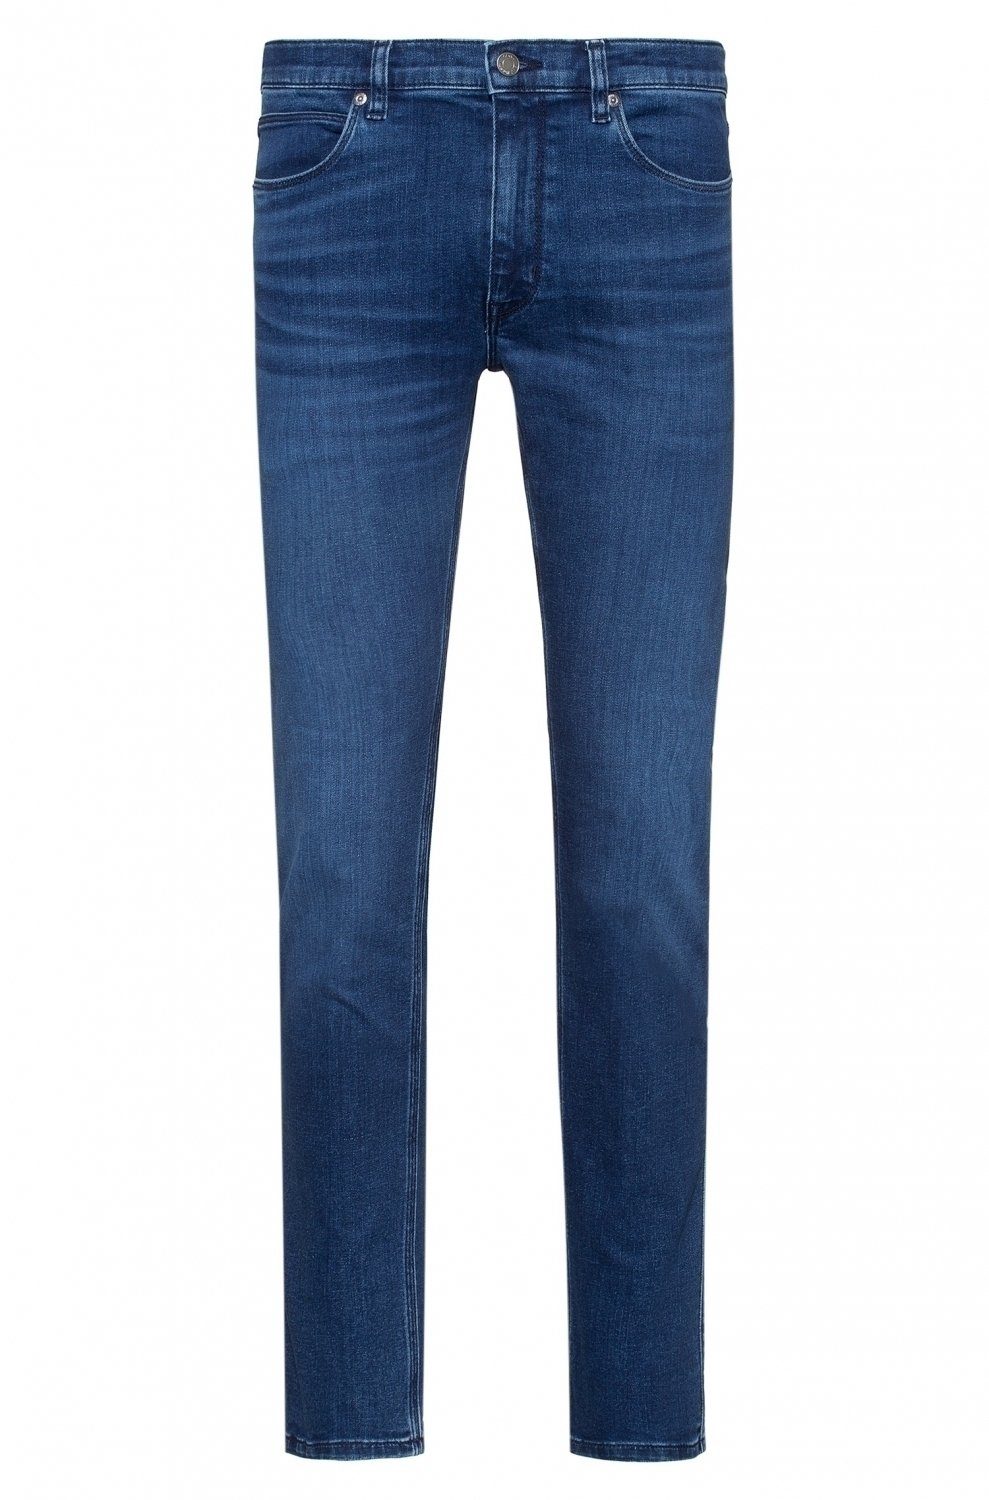 BOSS 5-Pocket-Jeans HUGO 734 online kaufen | OTTO